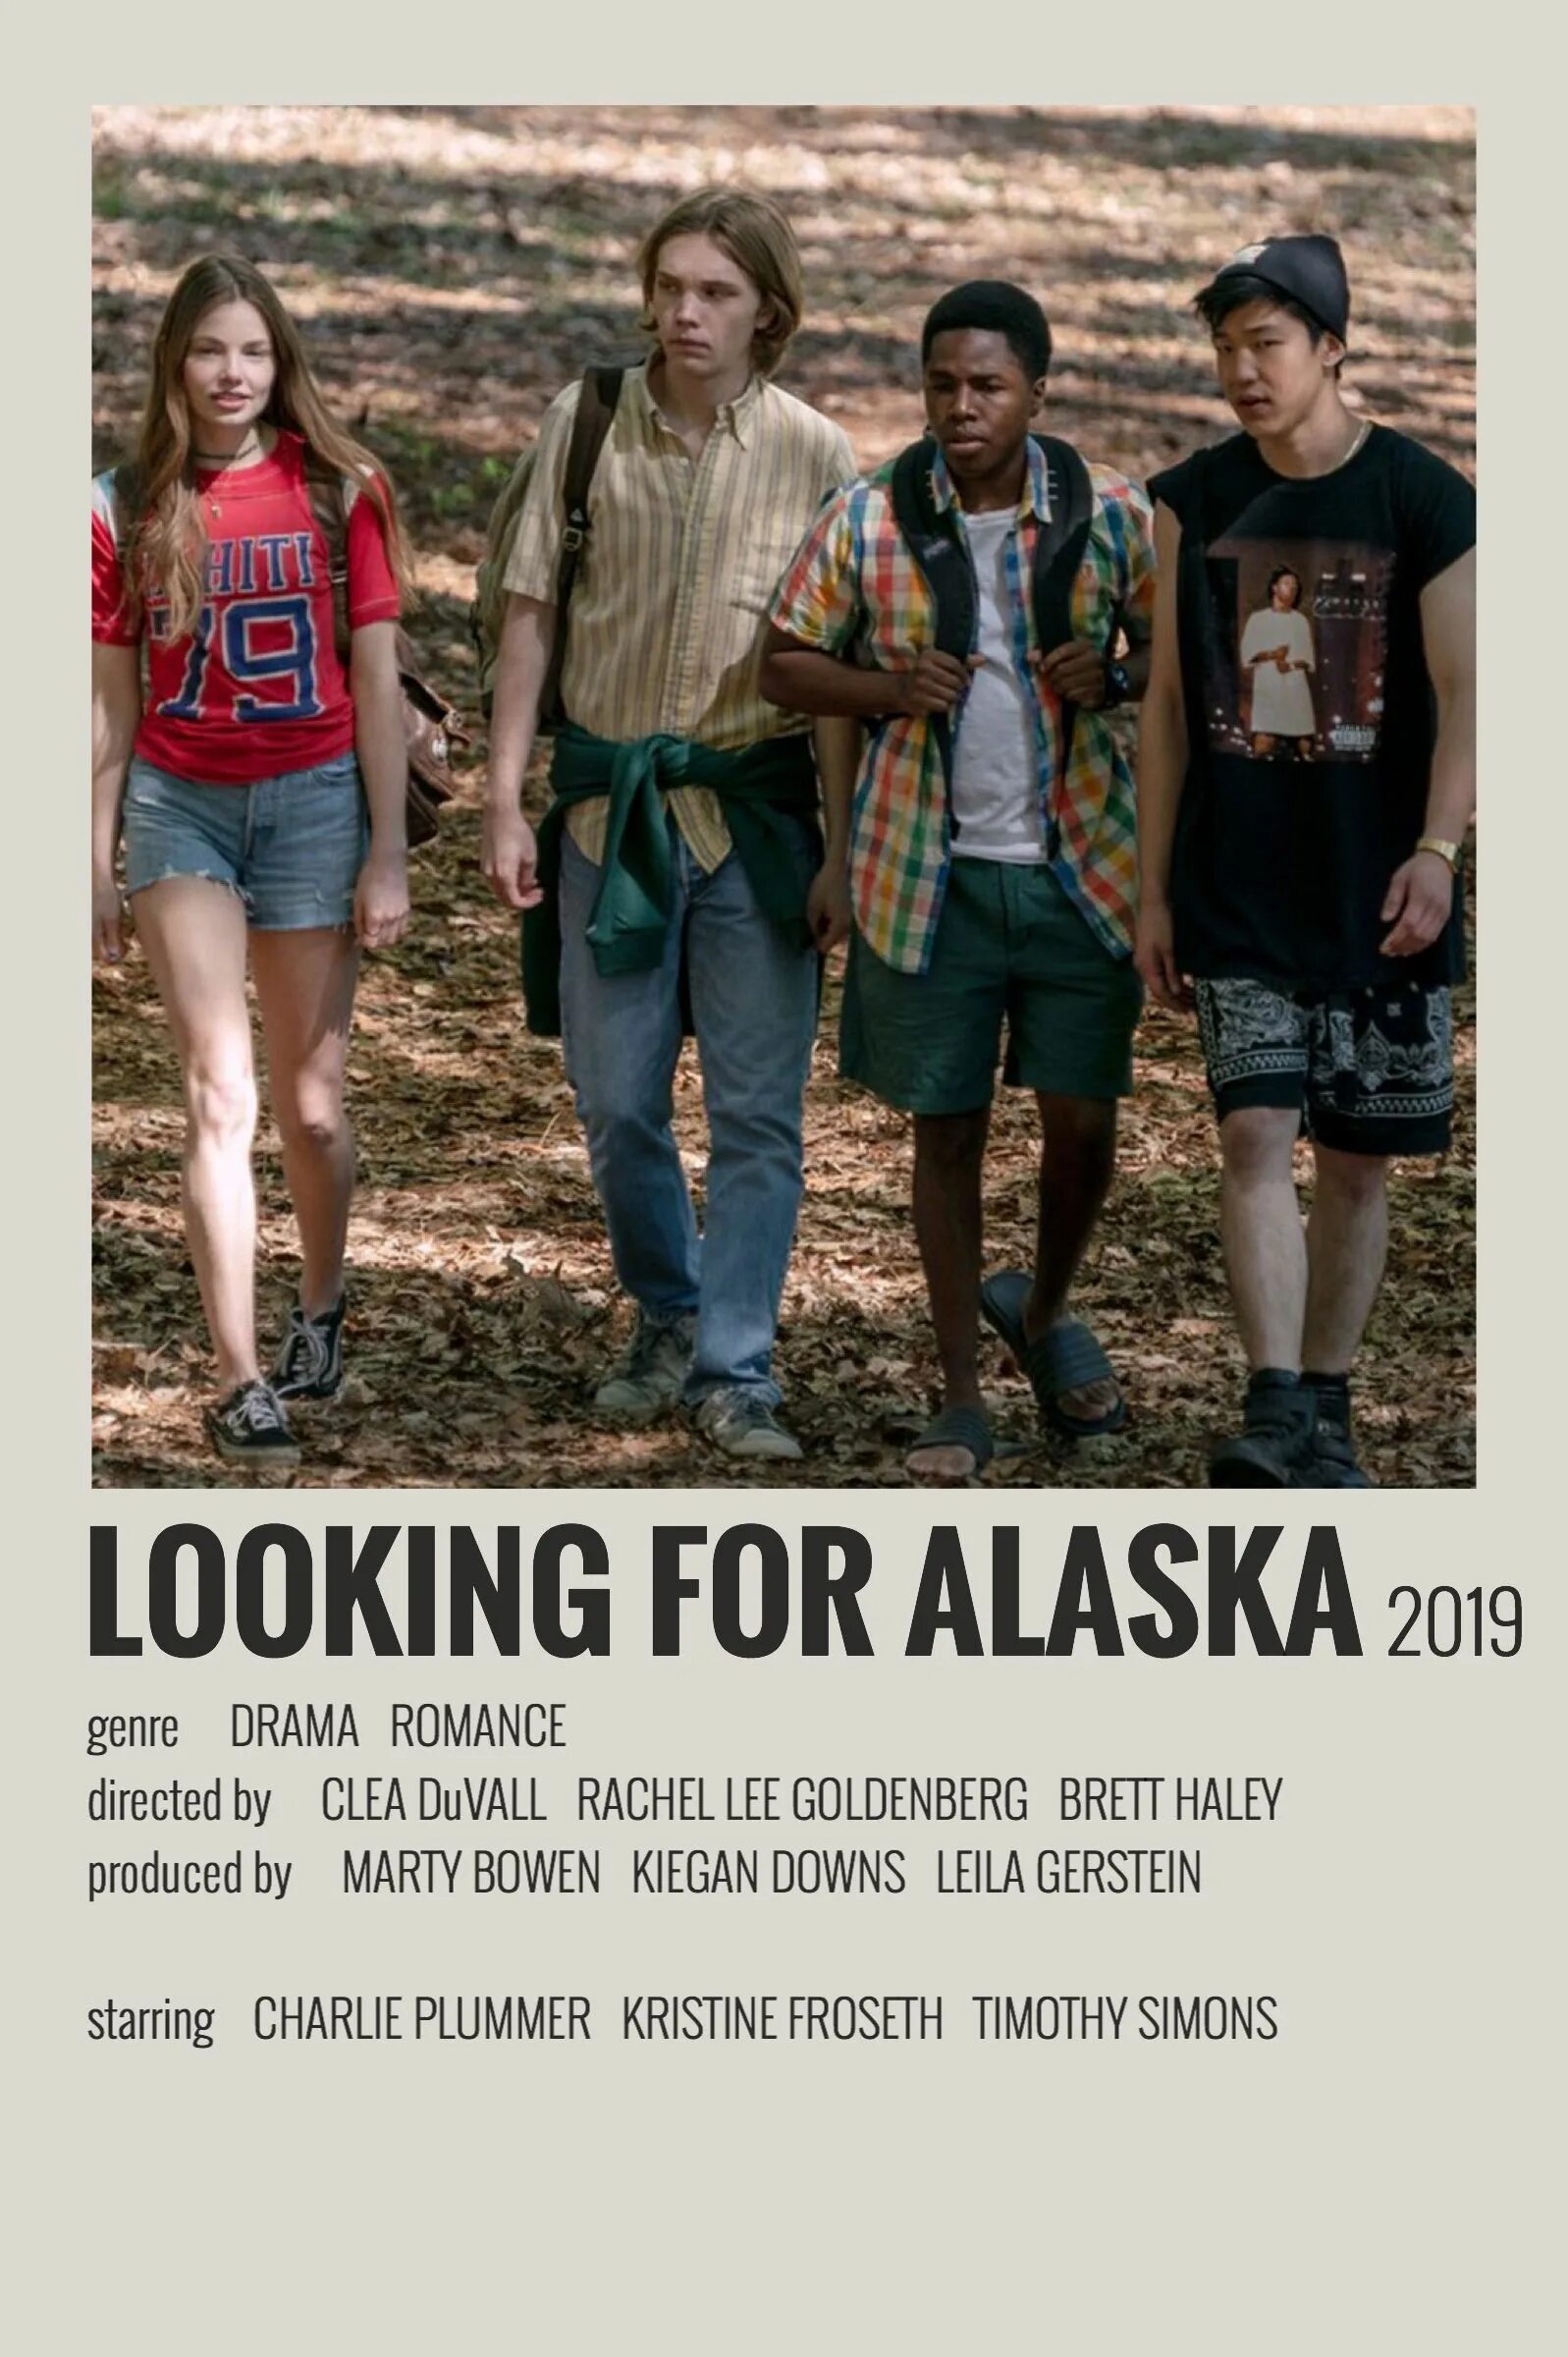 Найти аляску. Плакат looking for Alaska. Кристин Фросет в поисках Аляски. В поисках Аляски Аляска и Майлз.